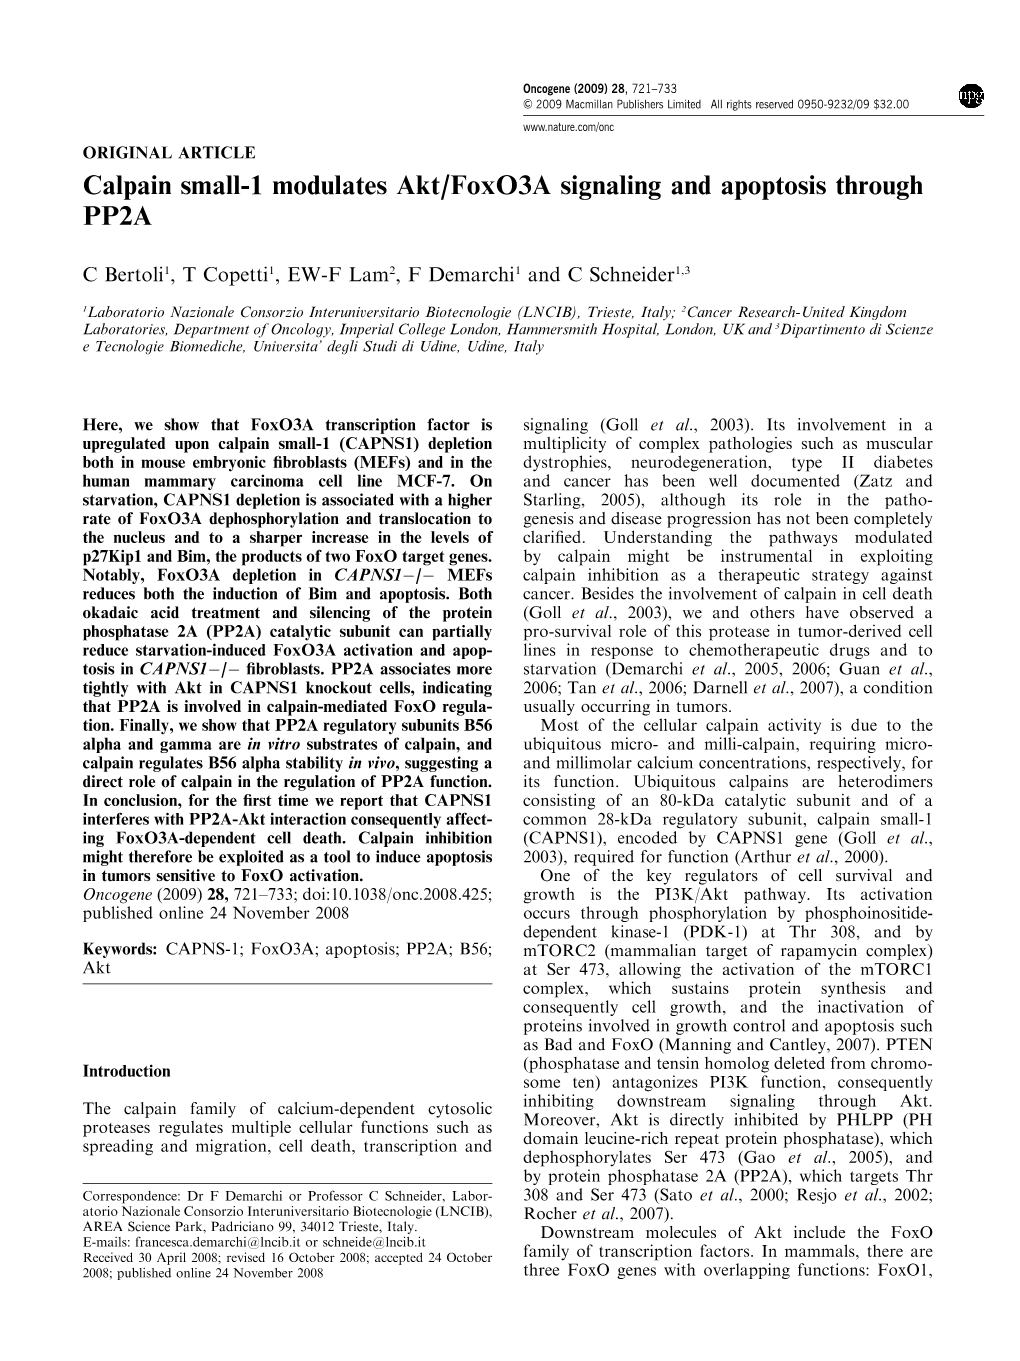 Calpain Small-1 Modulates Akt/Foxo3a Signaling and Apoptosis Through PP2A